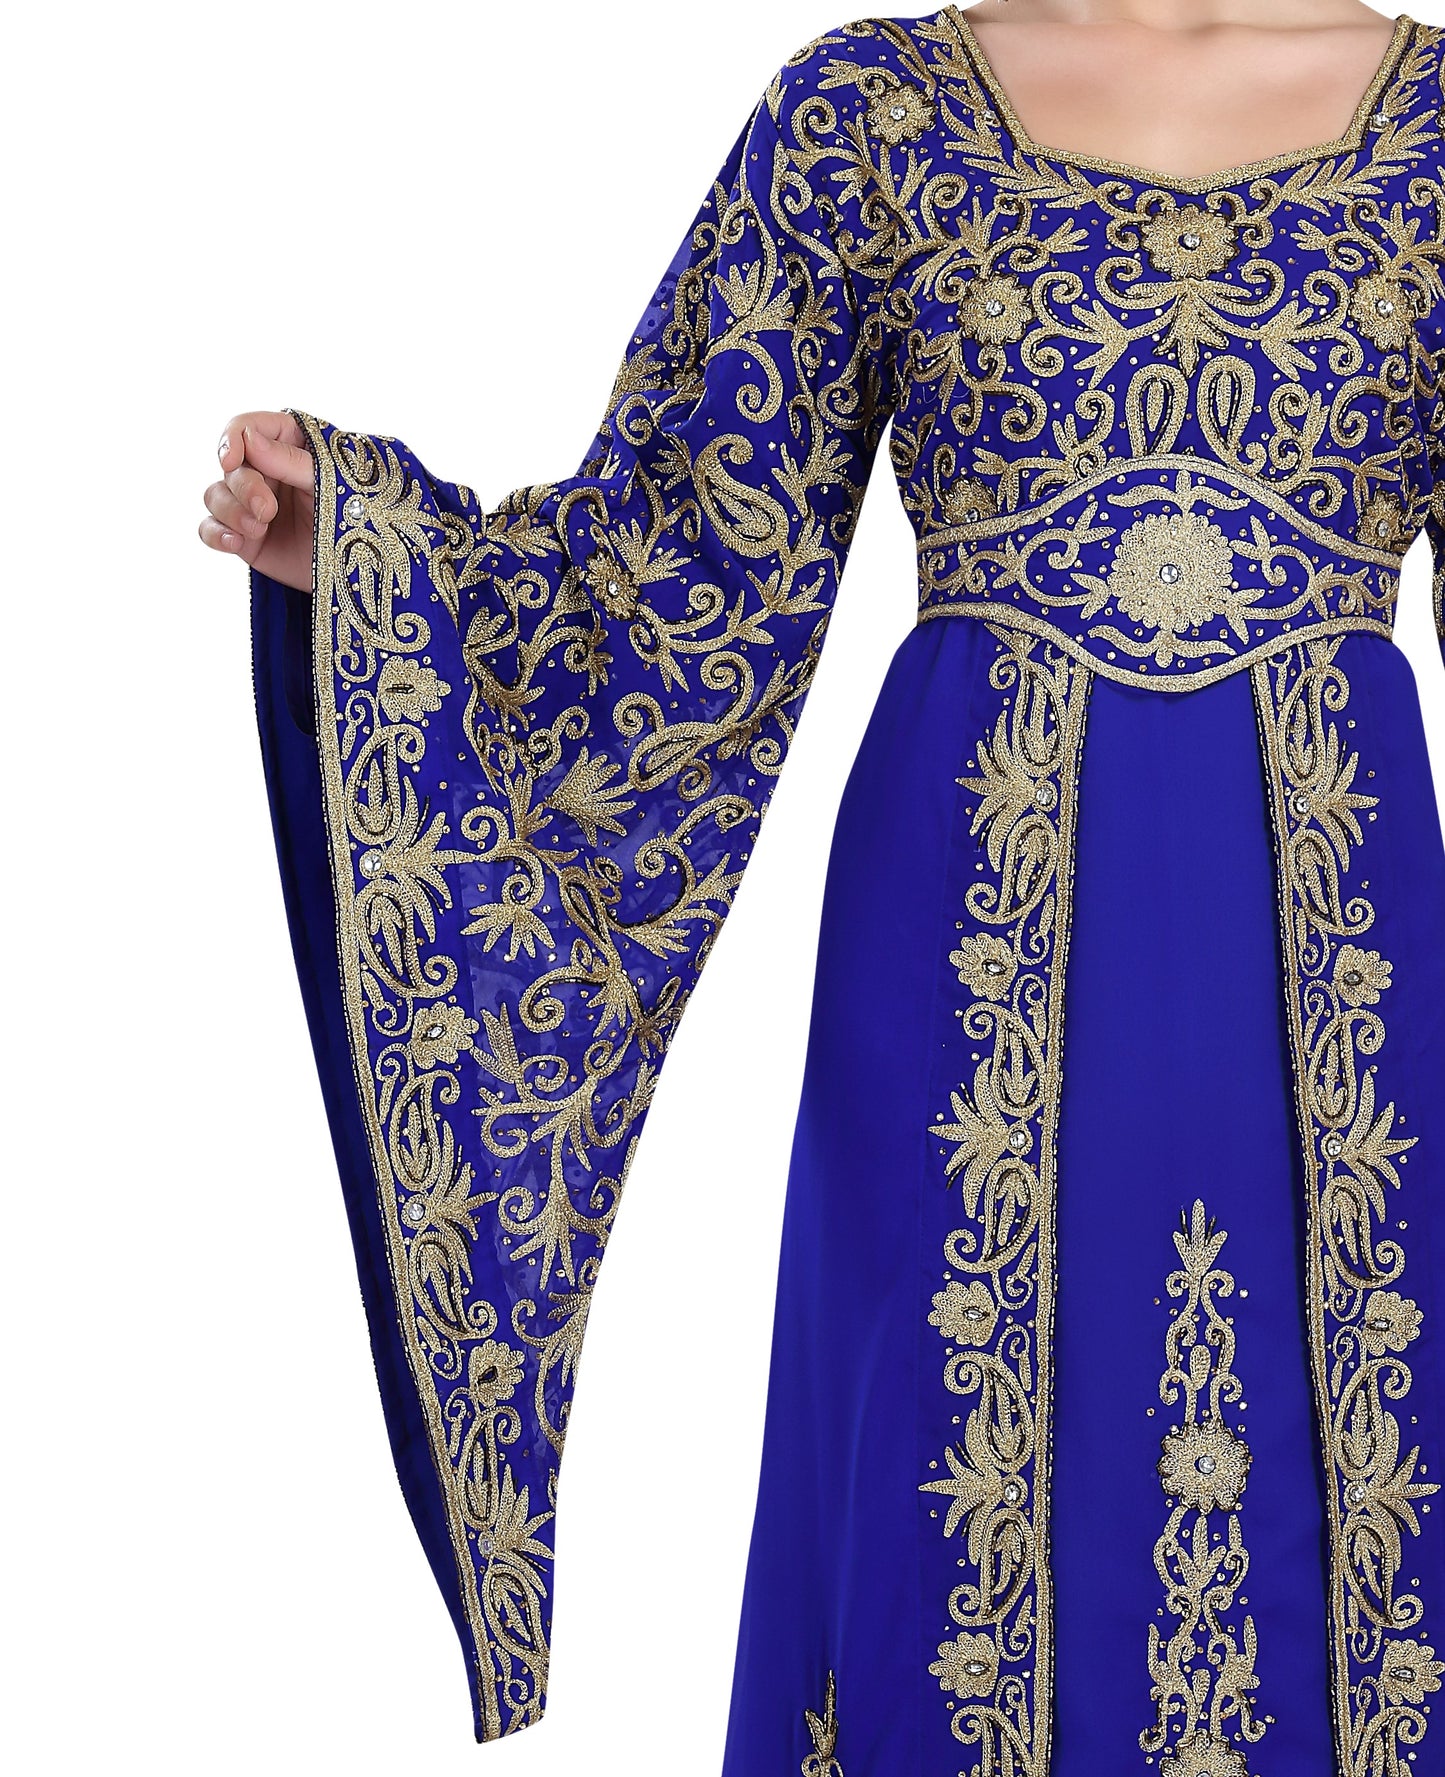 Load image into Gallery viewer, Embroidered Jellabiya Dubai Caftan Dress - Maxim Creation
